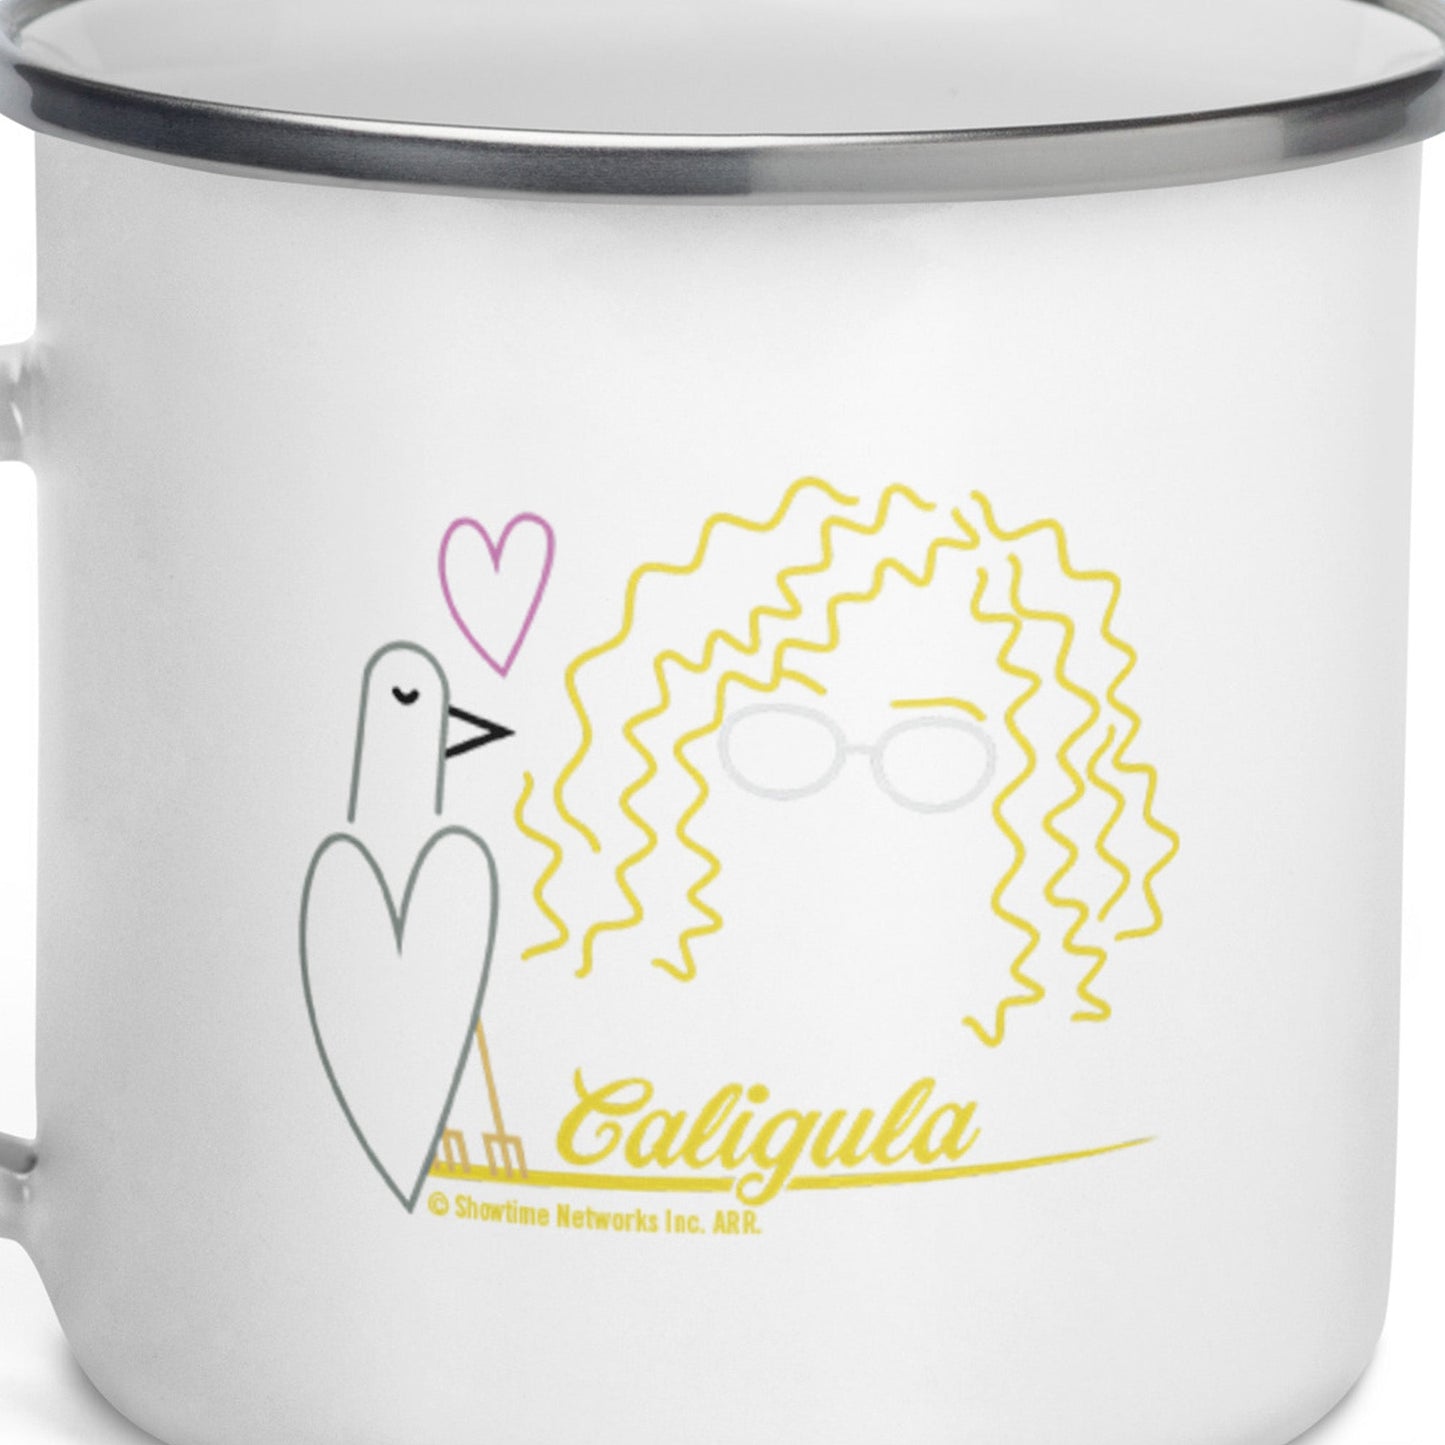 Yellowjackets Caligula Enamel Mug - Paramount Shop